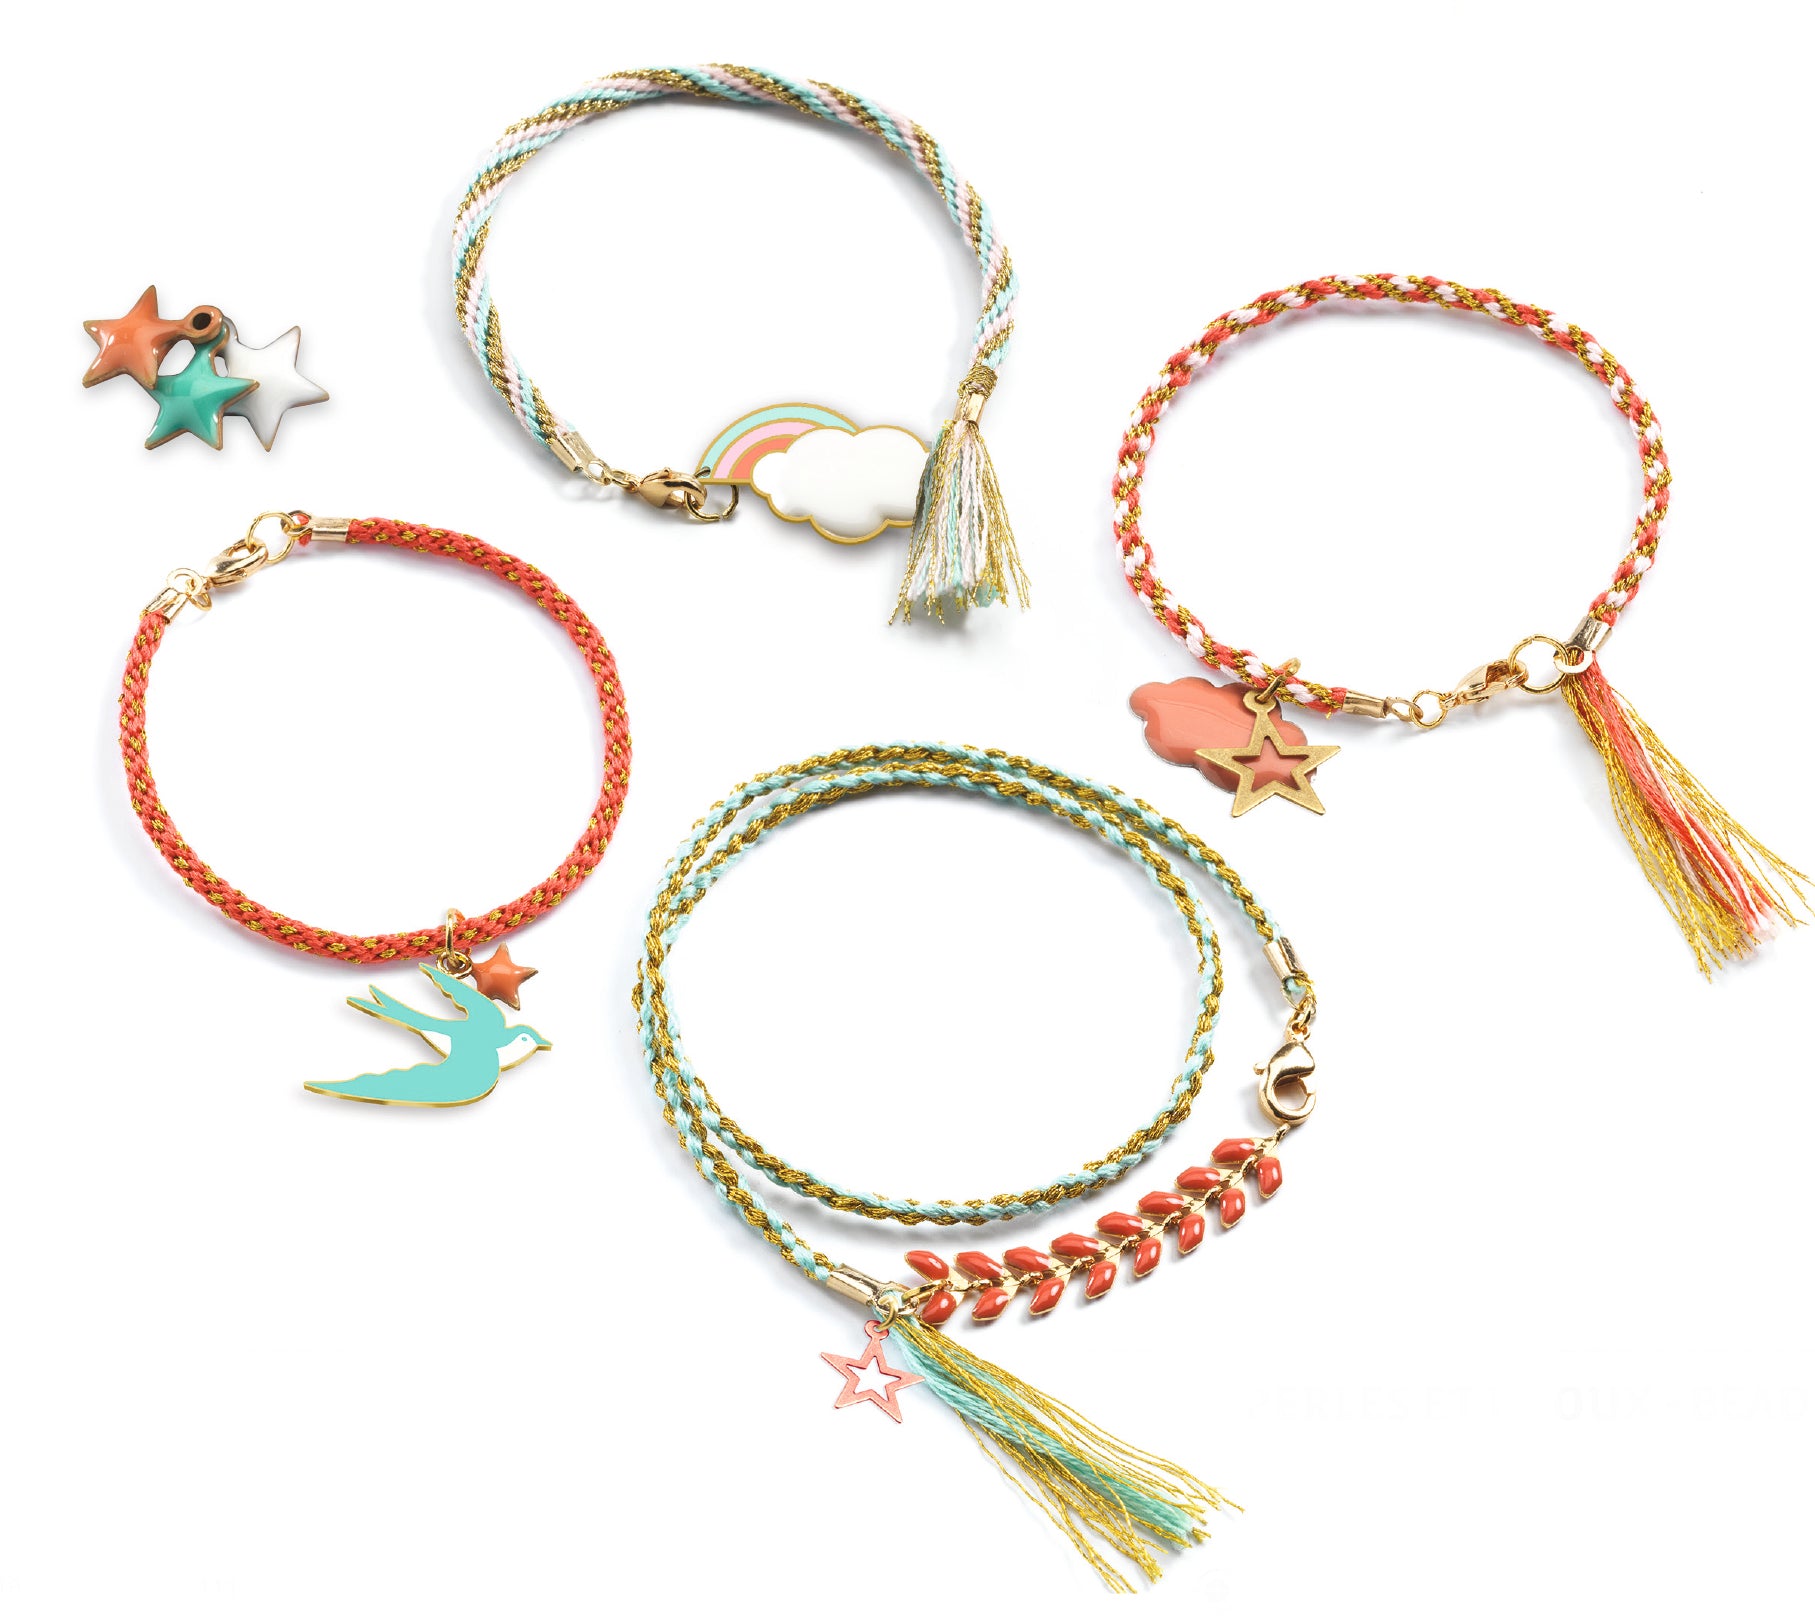 Celeste Beads and Jewelry Kit